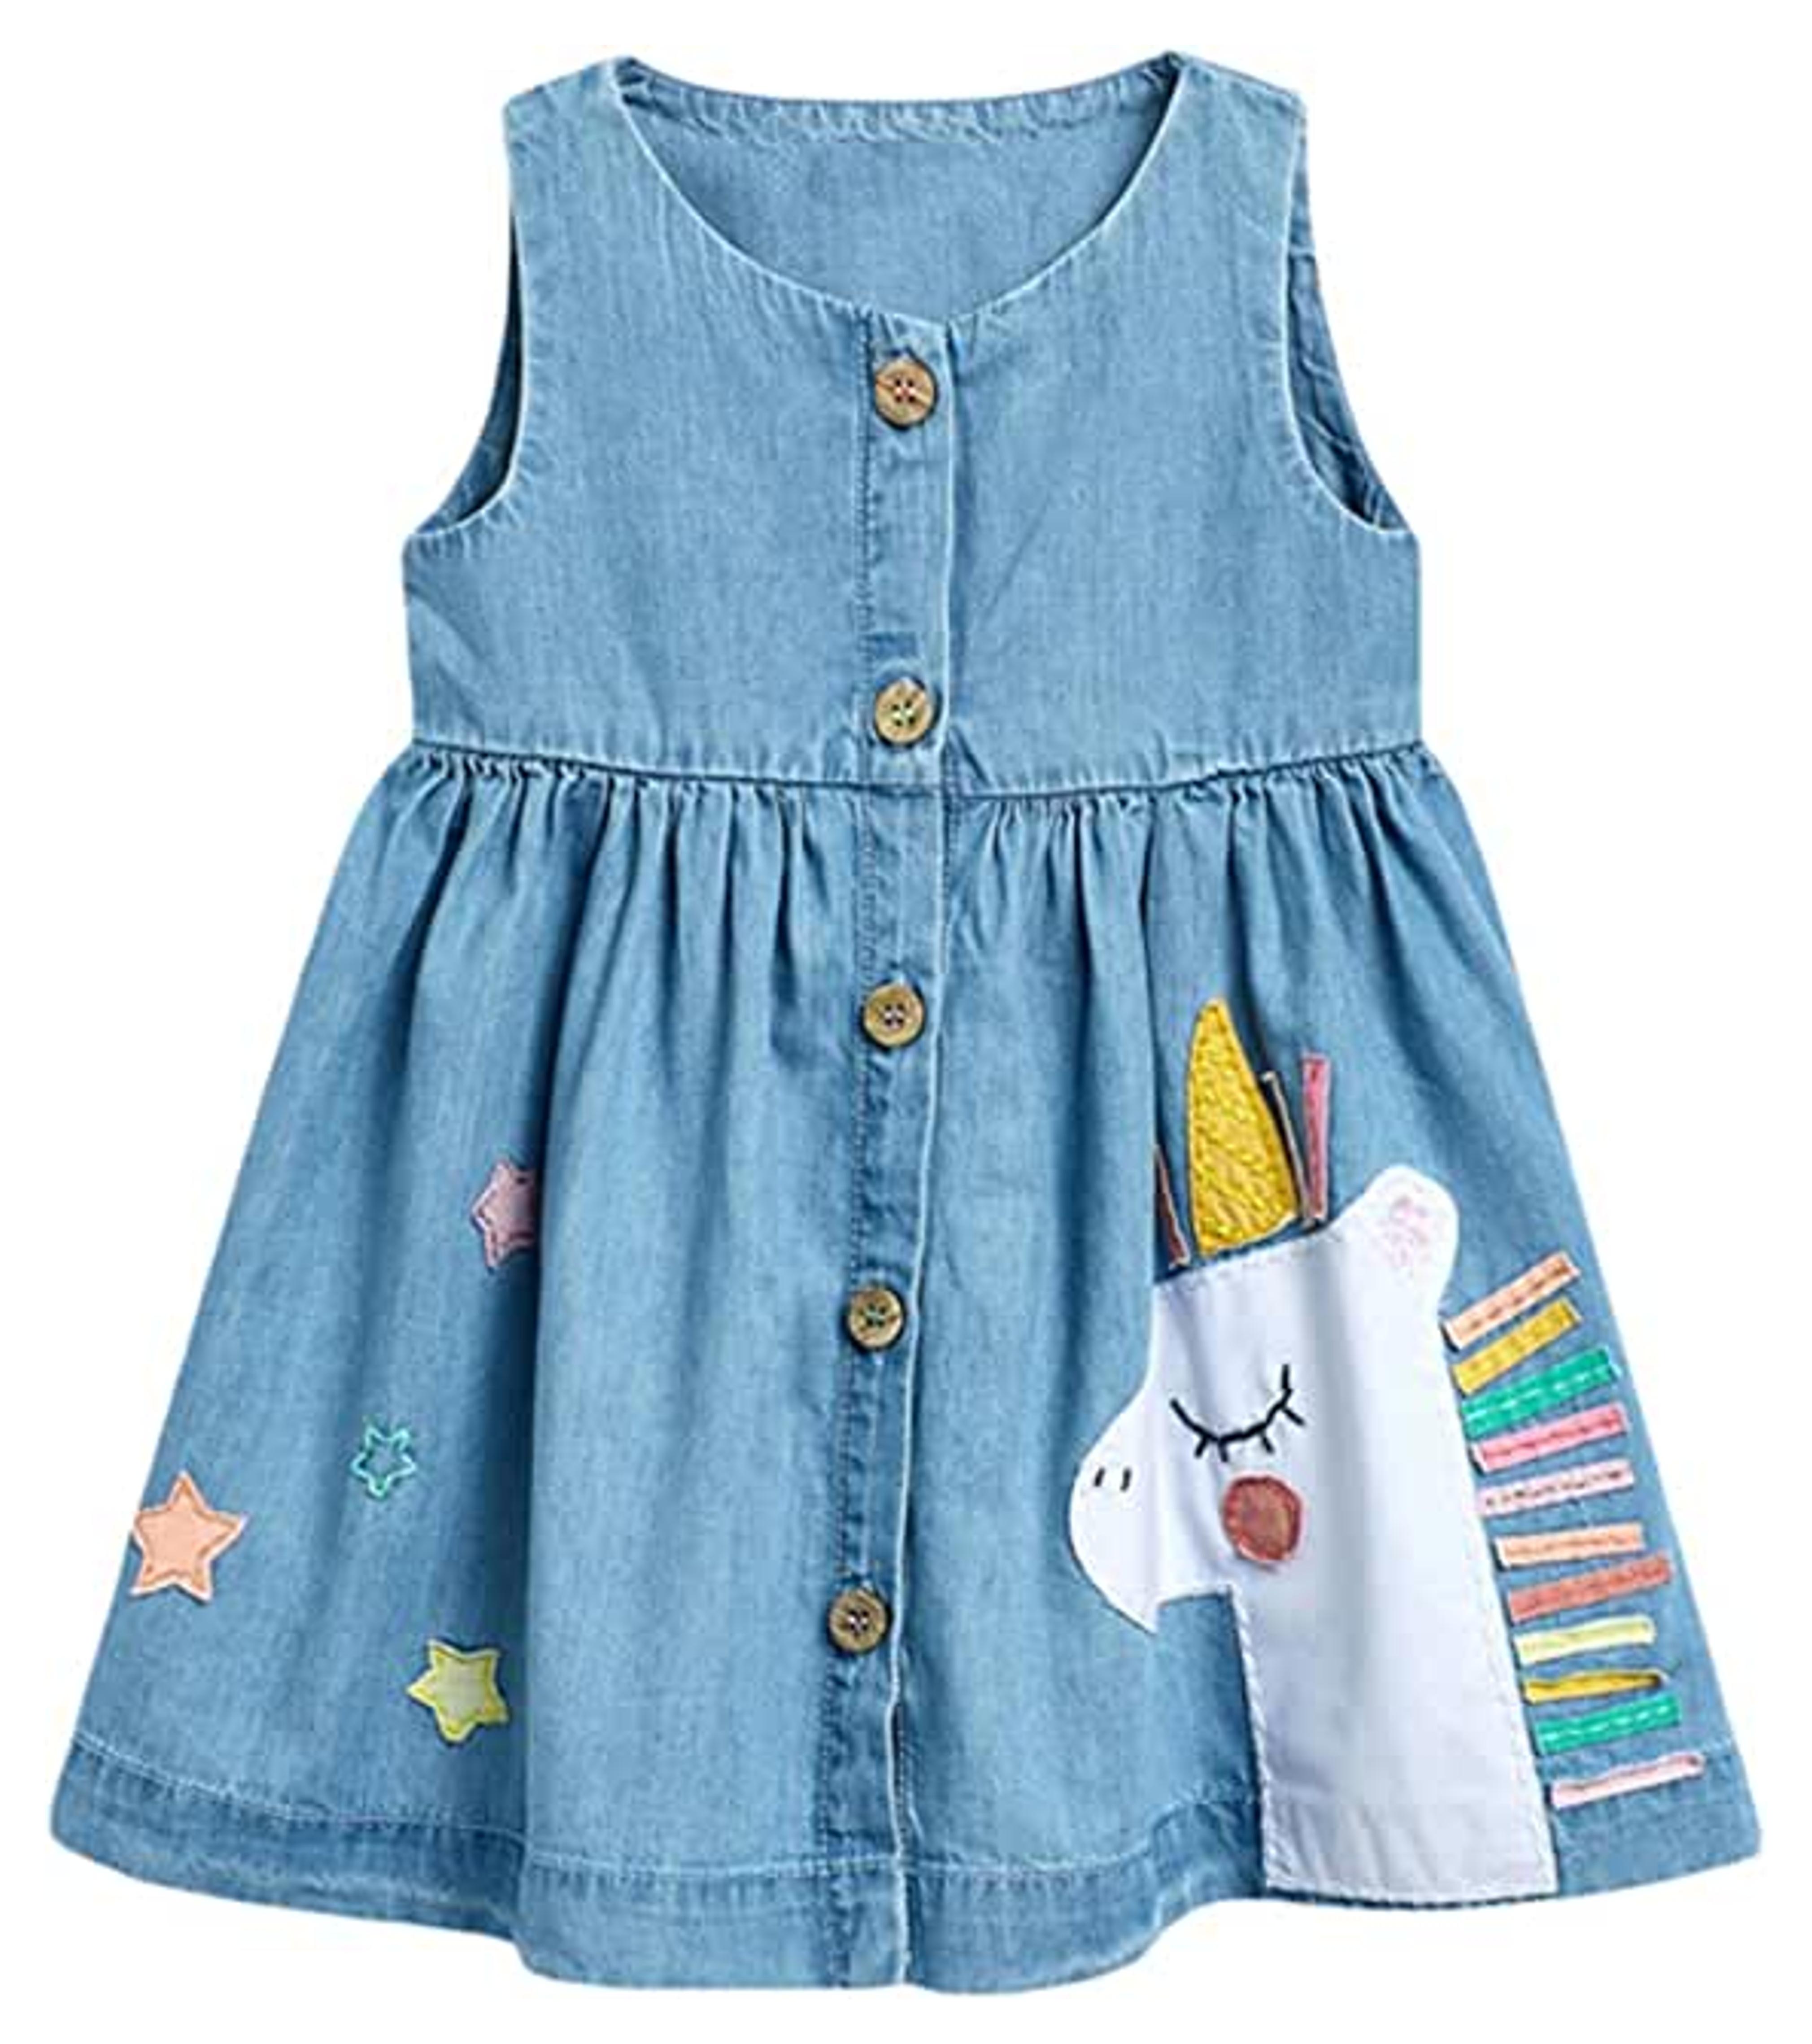 Sponsored Ad - HILEELANG Toddler Girls Short Sleeve Cotton Casual Dress Summer Spring Cartoon Appliques Playwear Basic Shi...